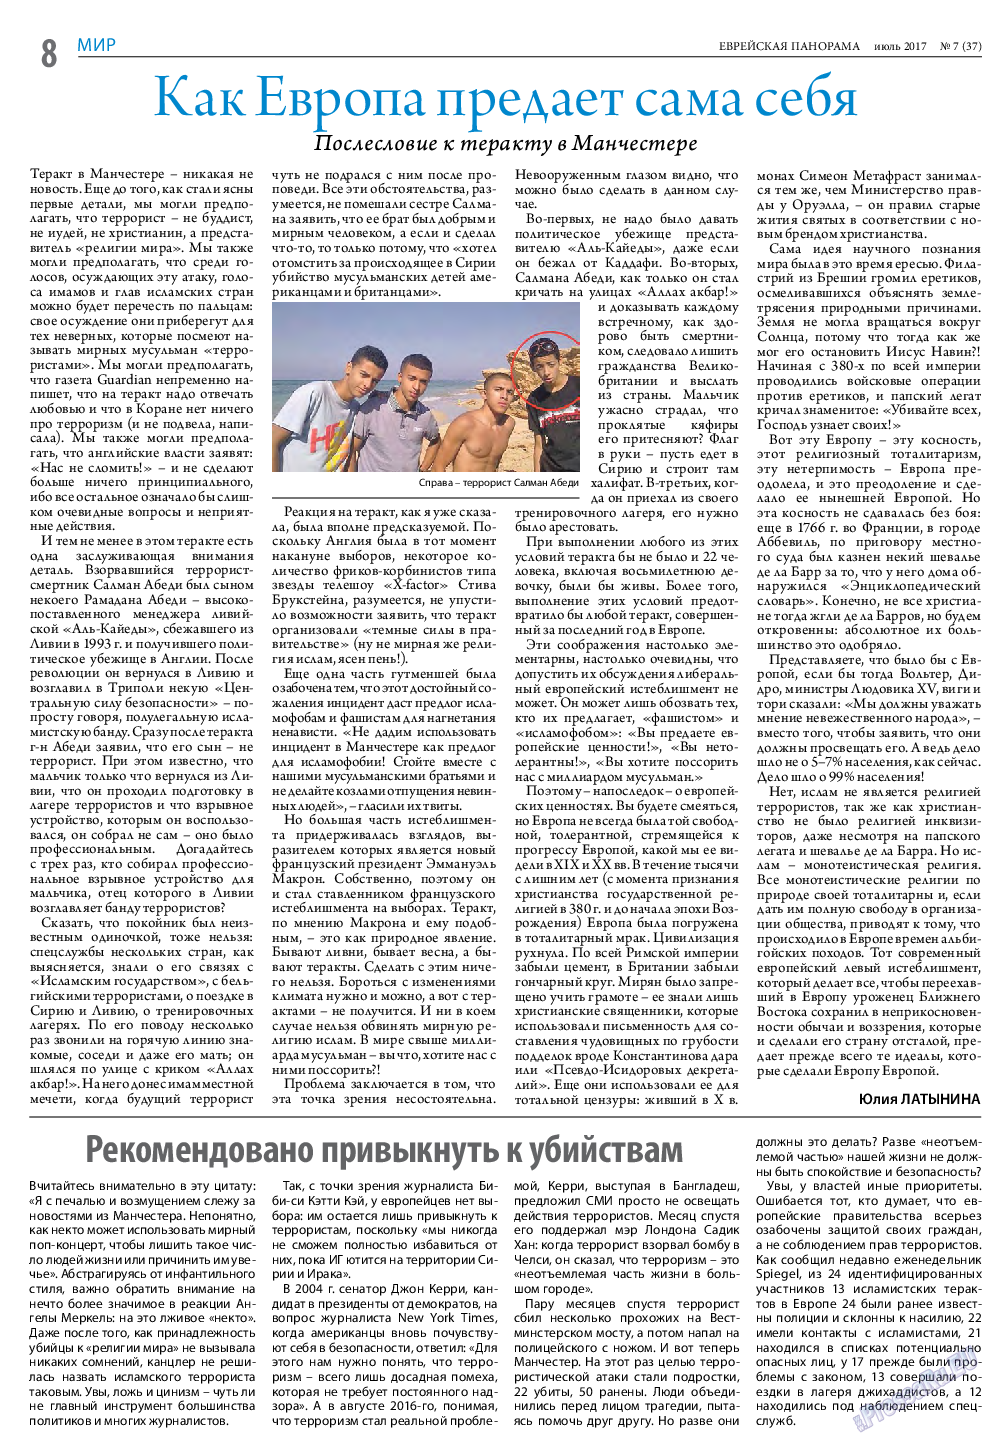 Еврейская панорама, газета. 2017 №7 стр.8